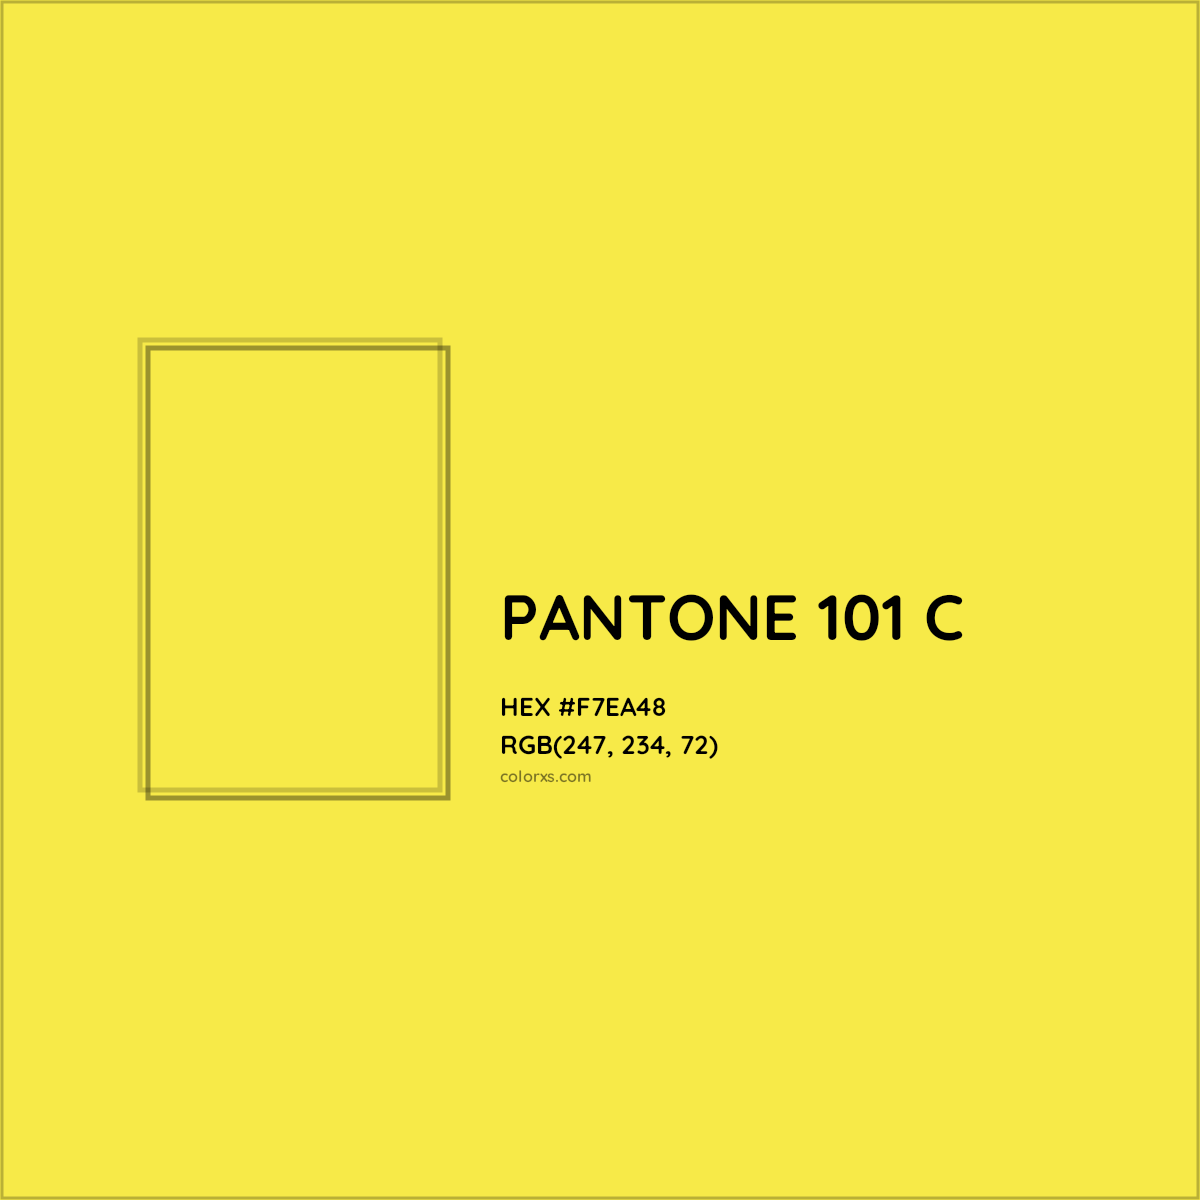 HEX #F7EA48 PANTONE 101 C CMS Pantone PMS - Color Code